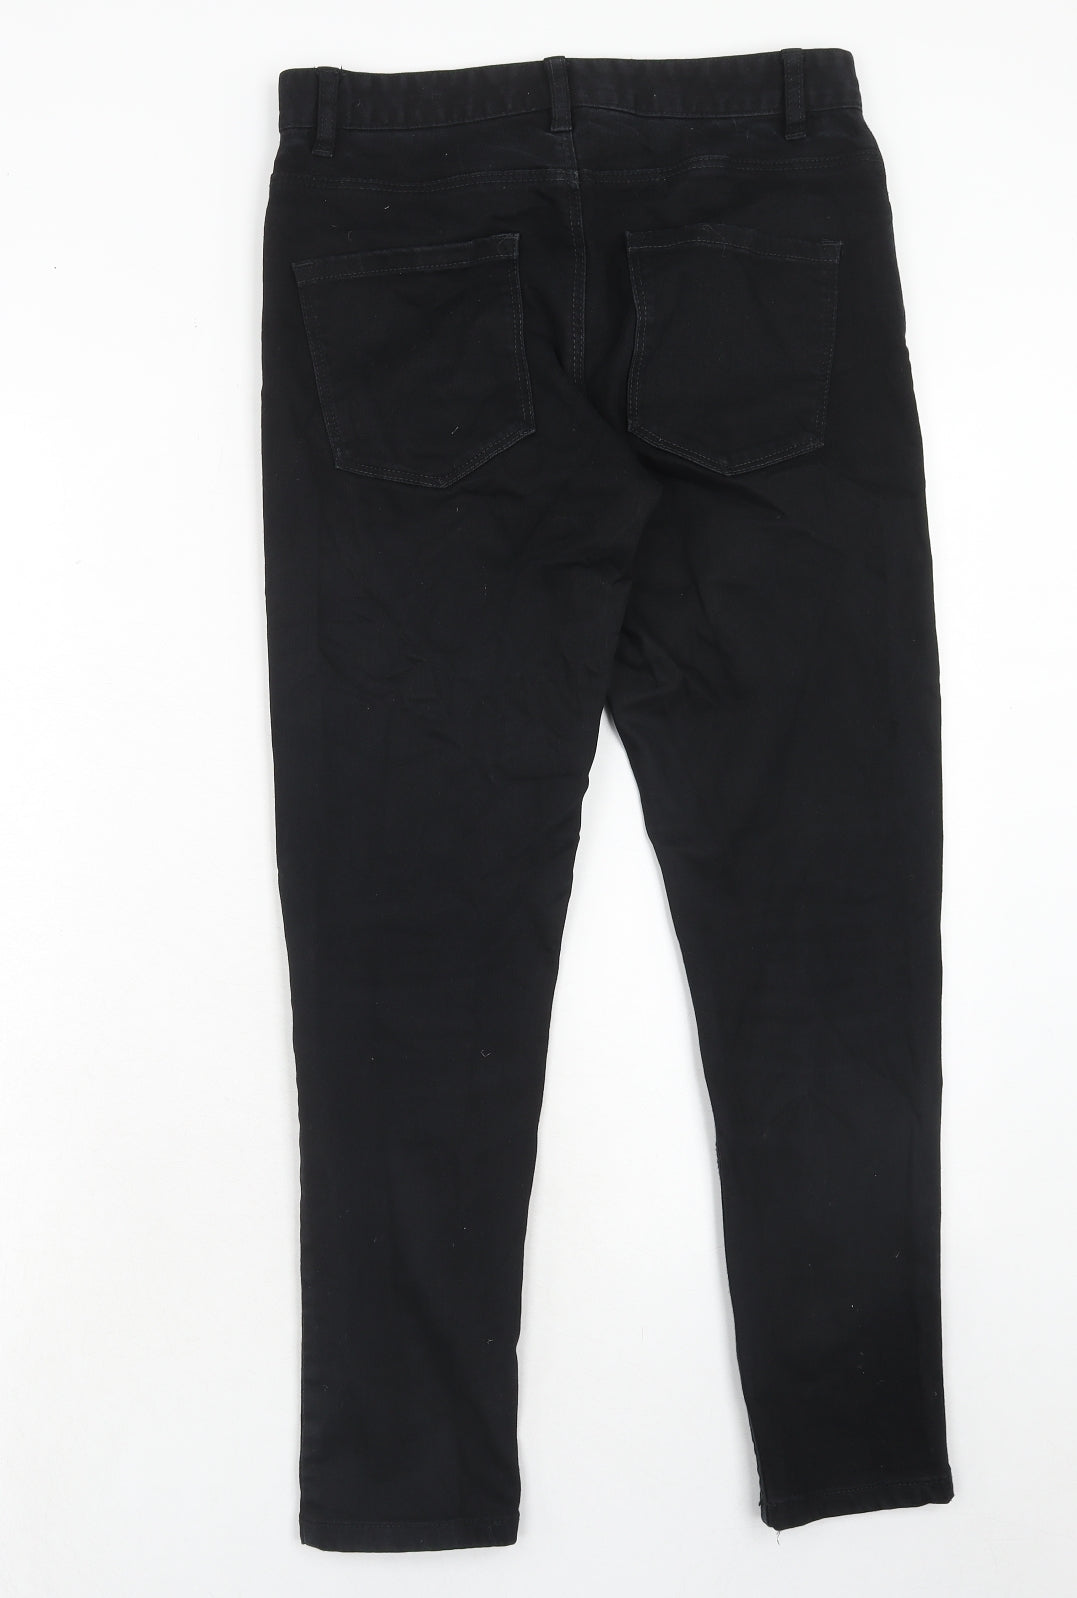 NEXT Mens Black Cotton Skinny Jeans Size 30 in L29 in Regular Zip